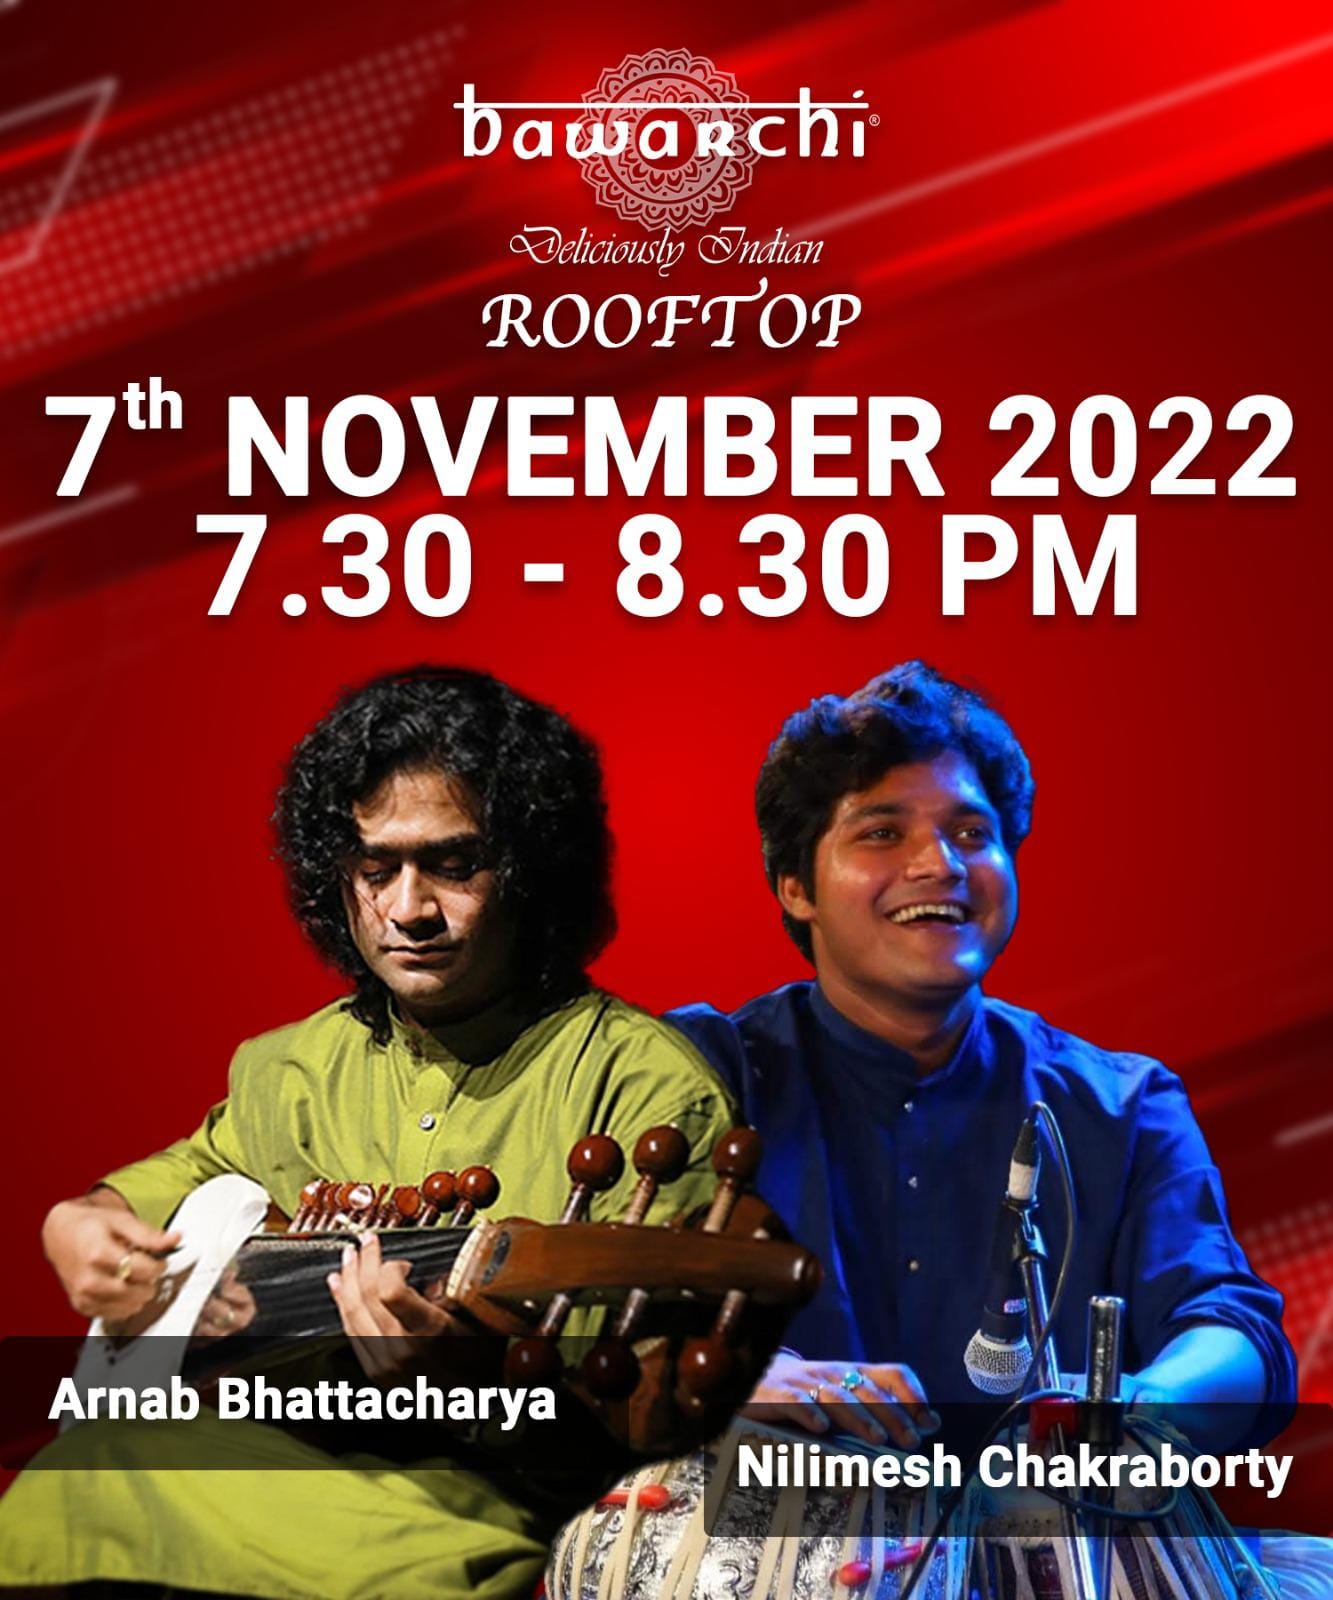 Live Concert @Bawarchi Rooftop 7th November 7.30 - 8.30 PM Arnab Bhattacharya & Nilimesh Chakraborty